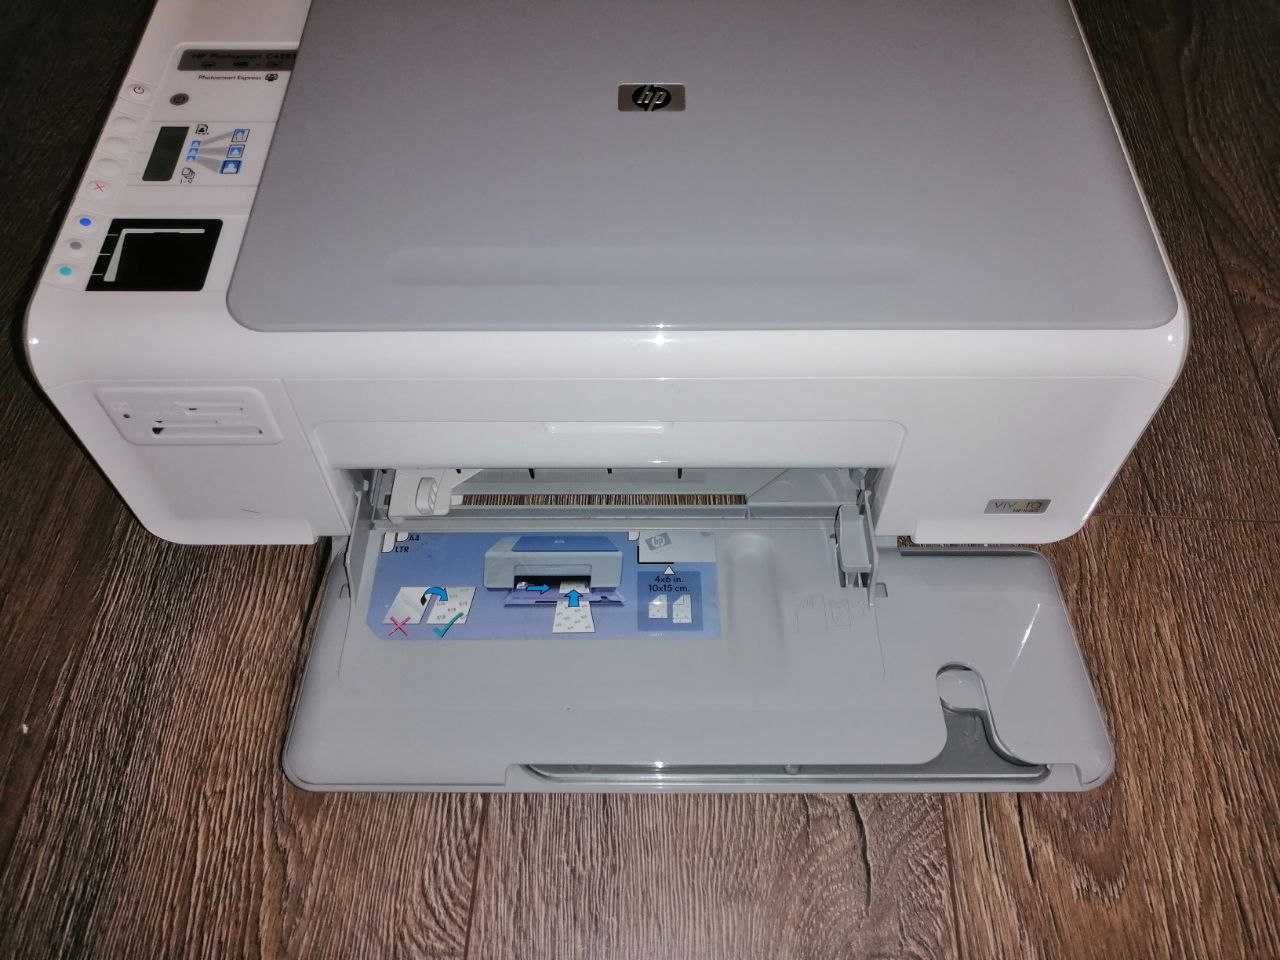 Принтер HP Photosmart C4283